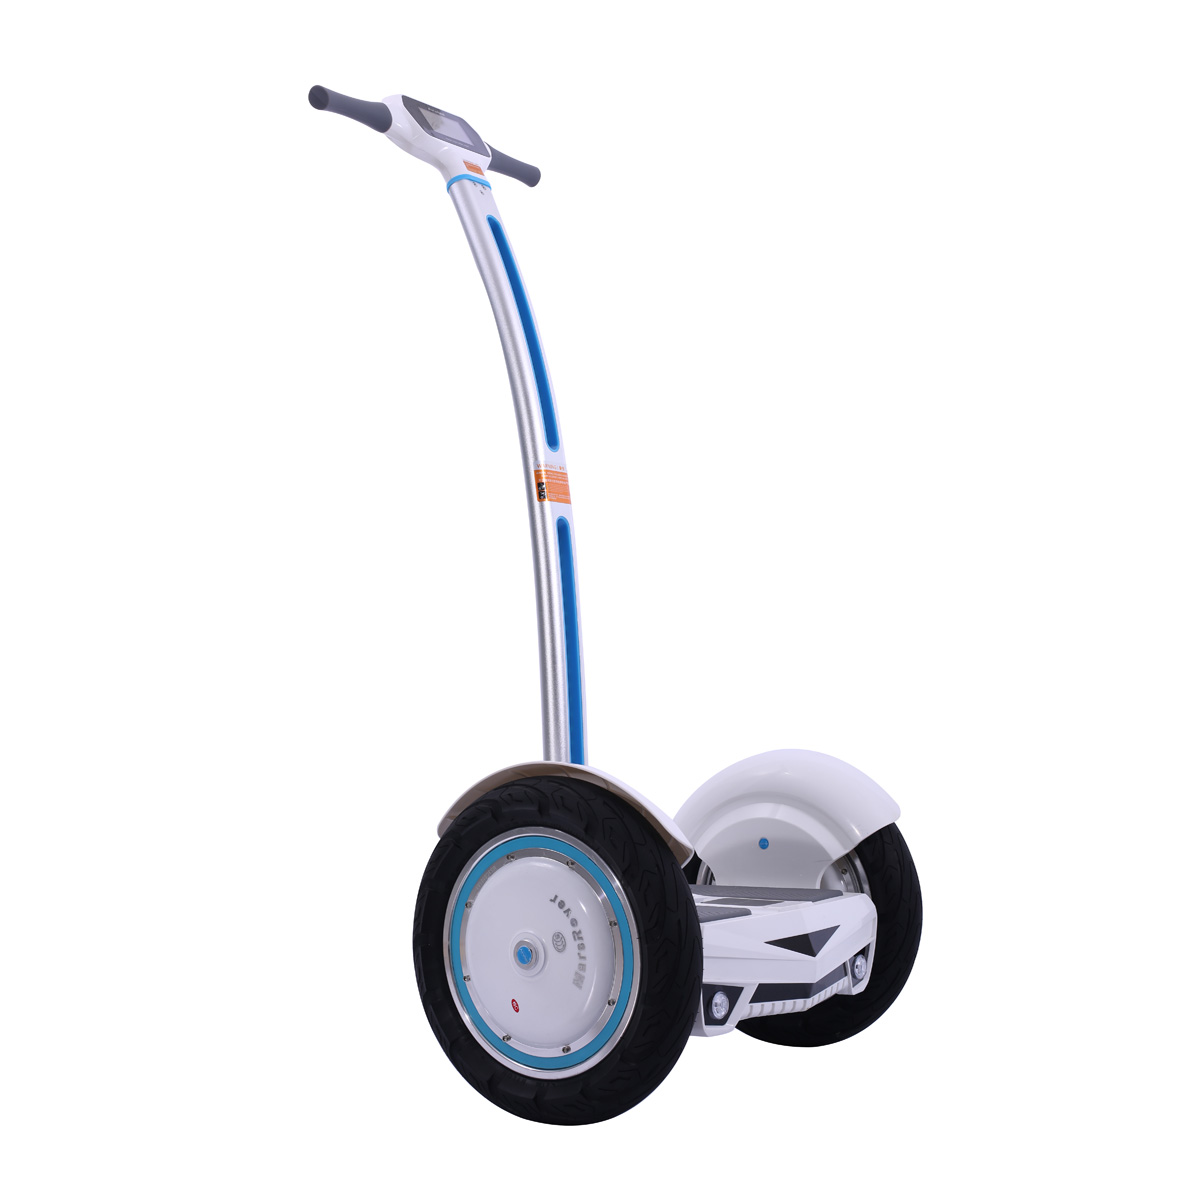 Airwheel S3 / S3T